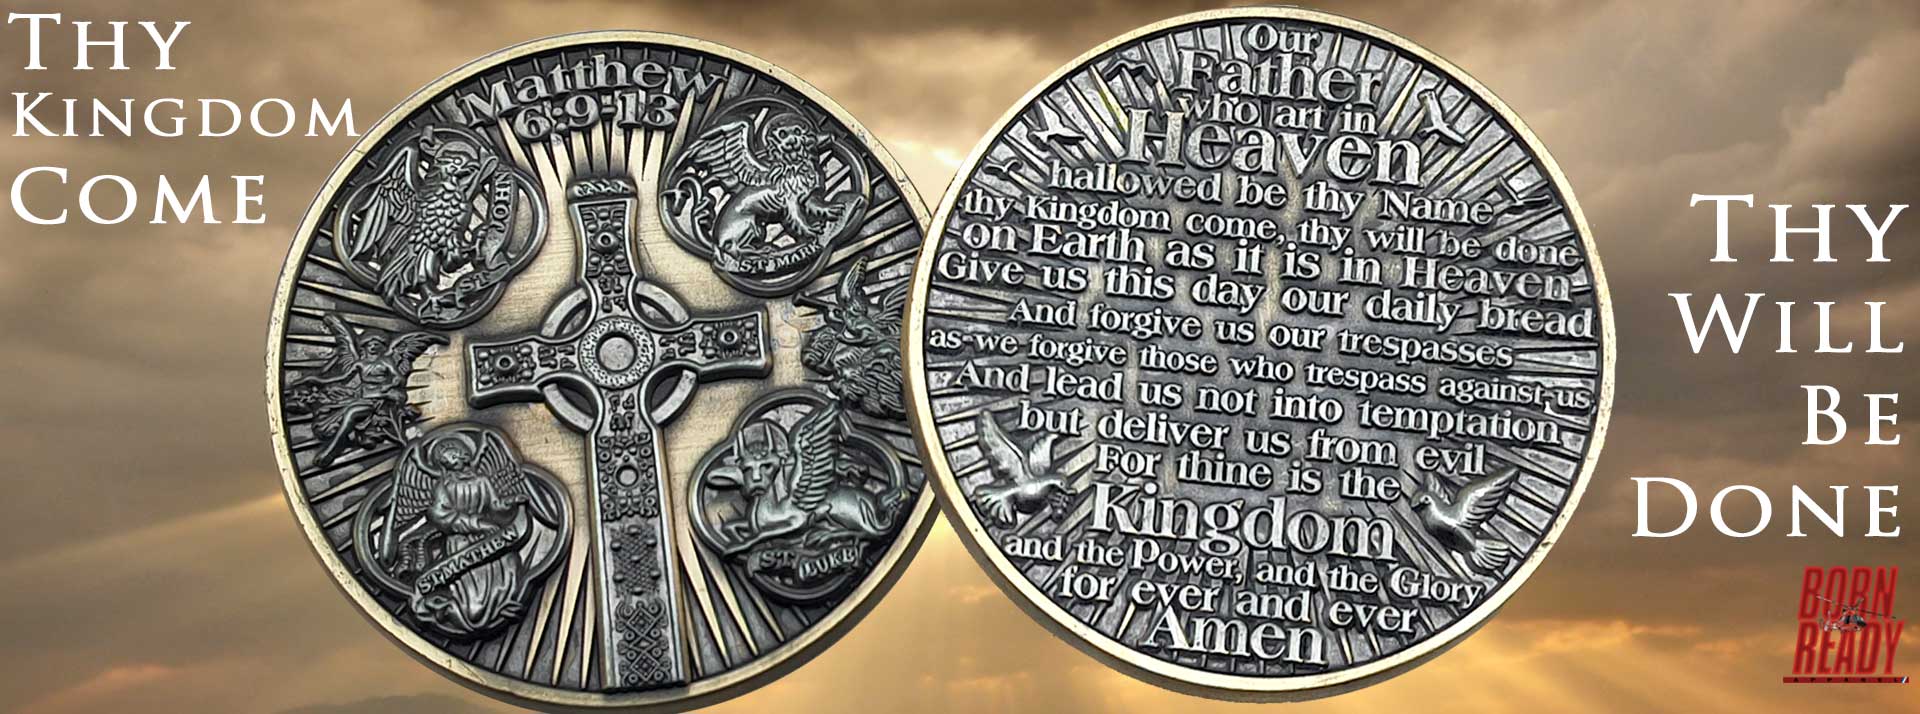 lords prayer coin header